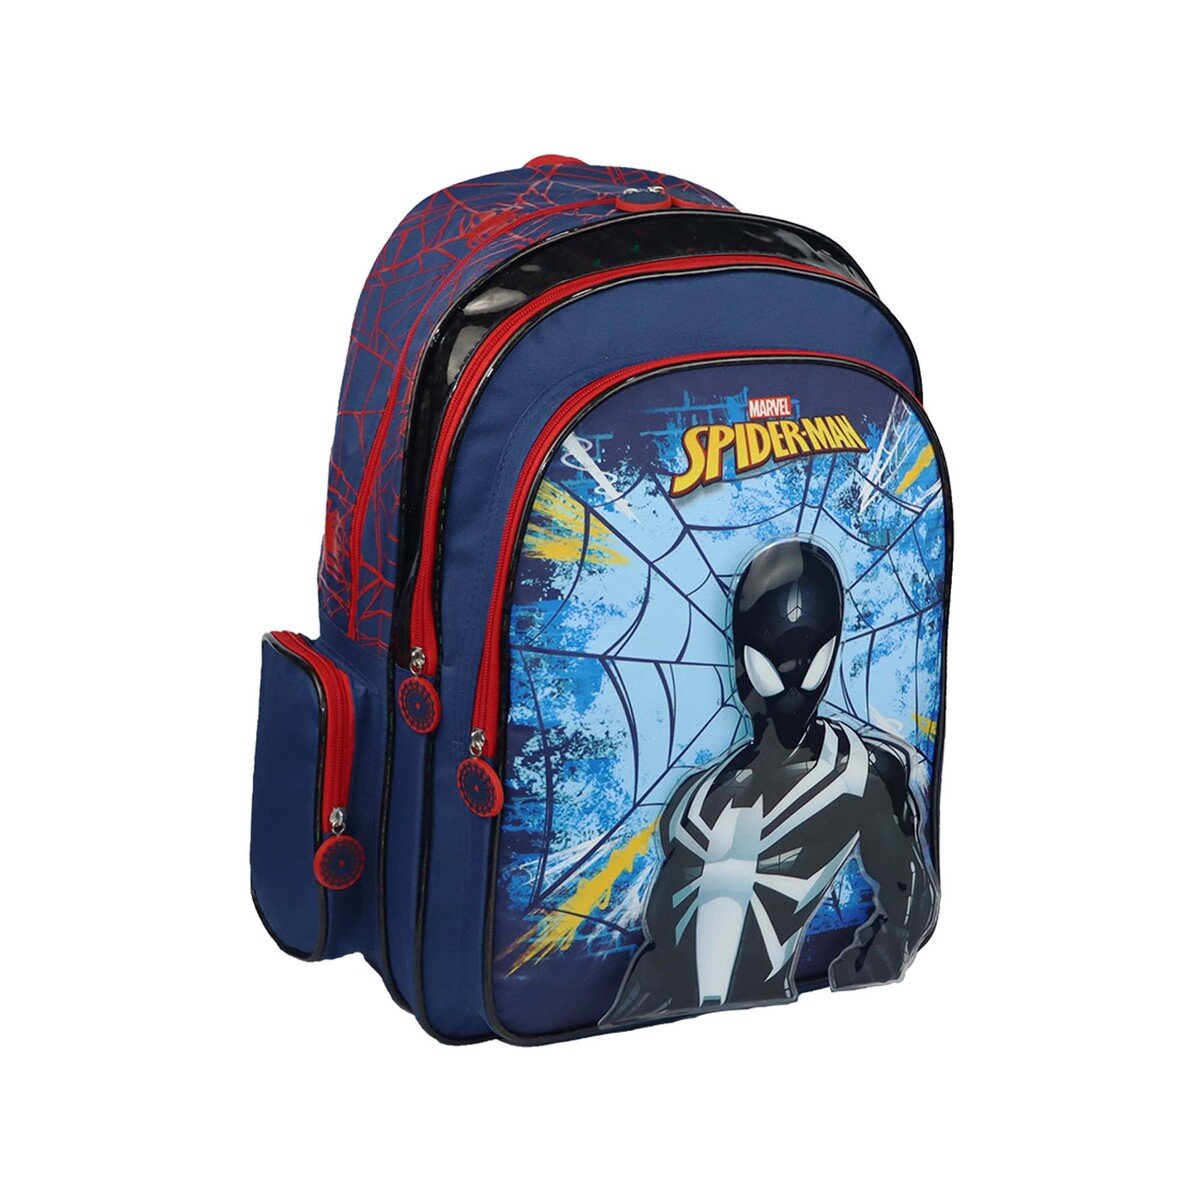 Spiderman School Backpack 6898100047 18inch